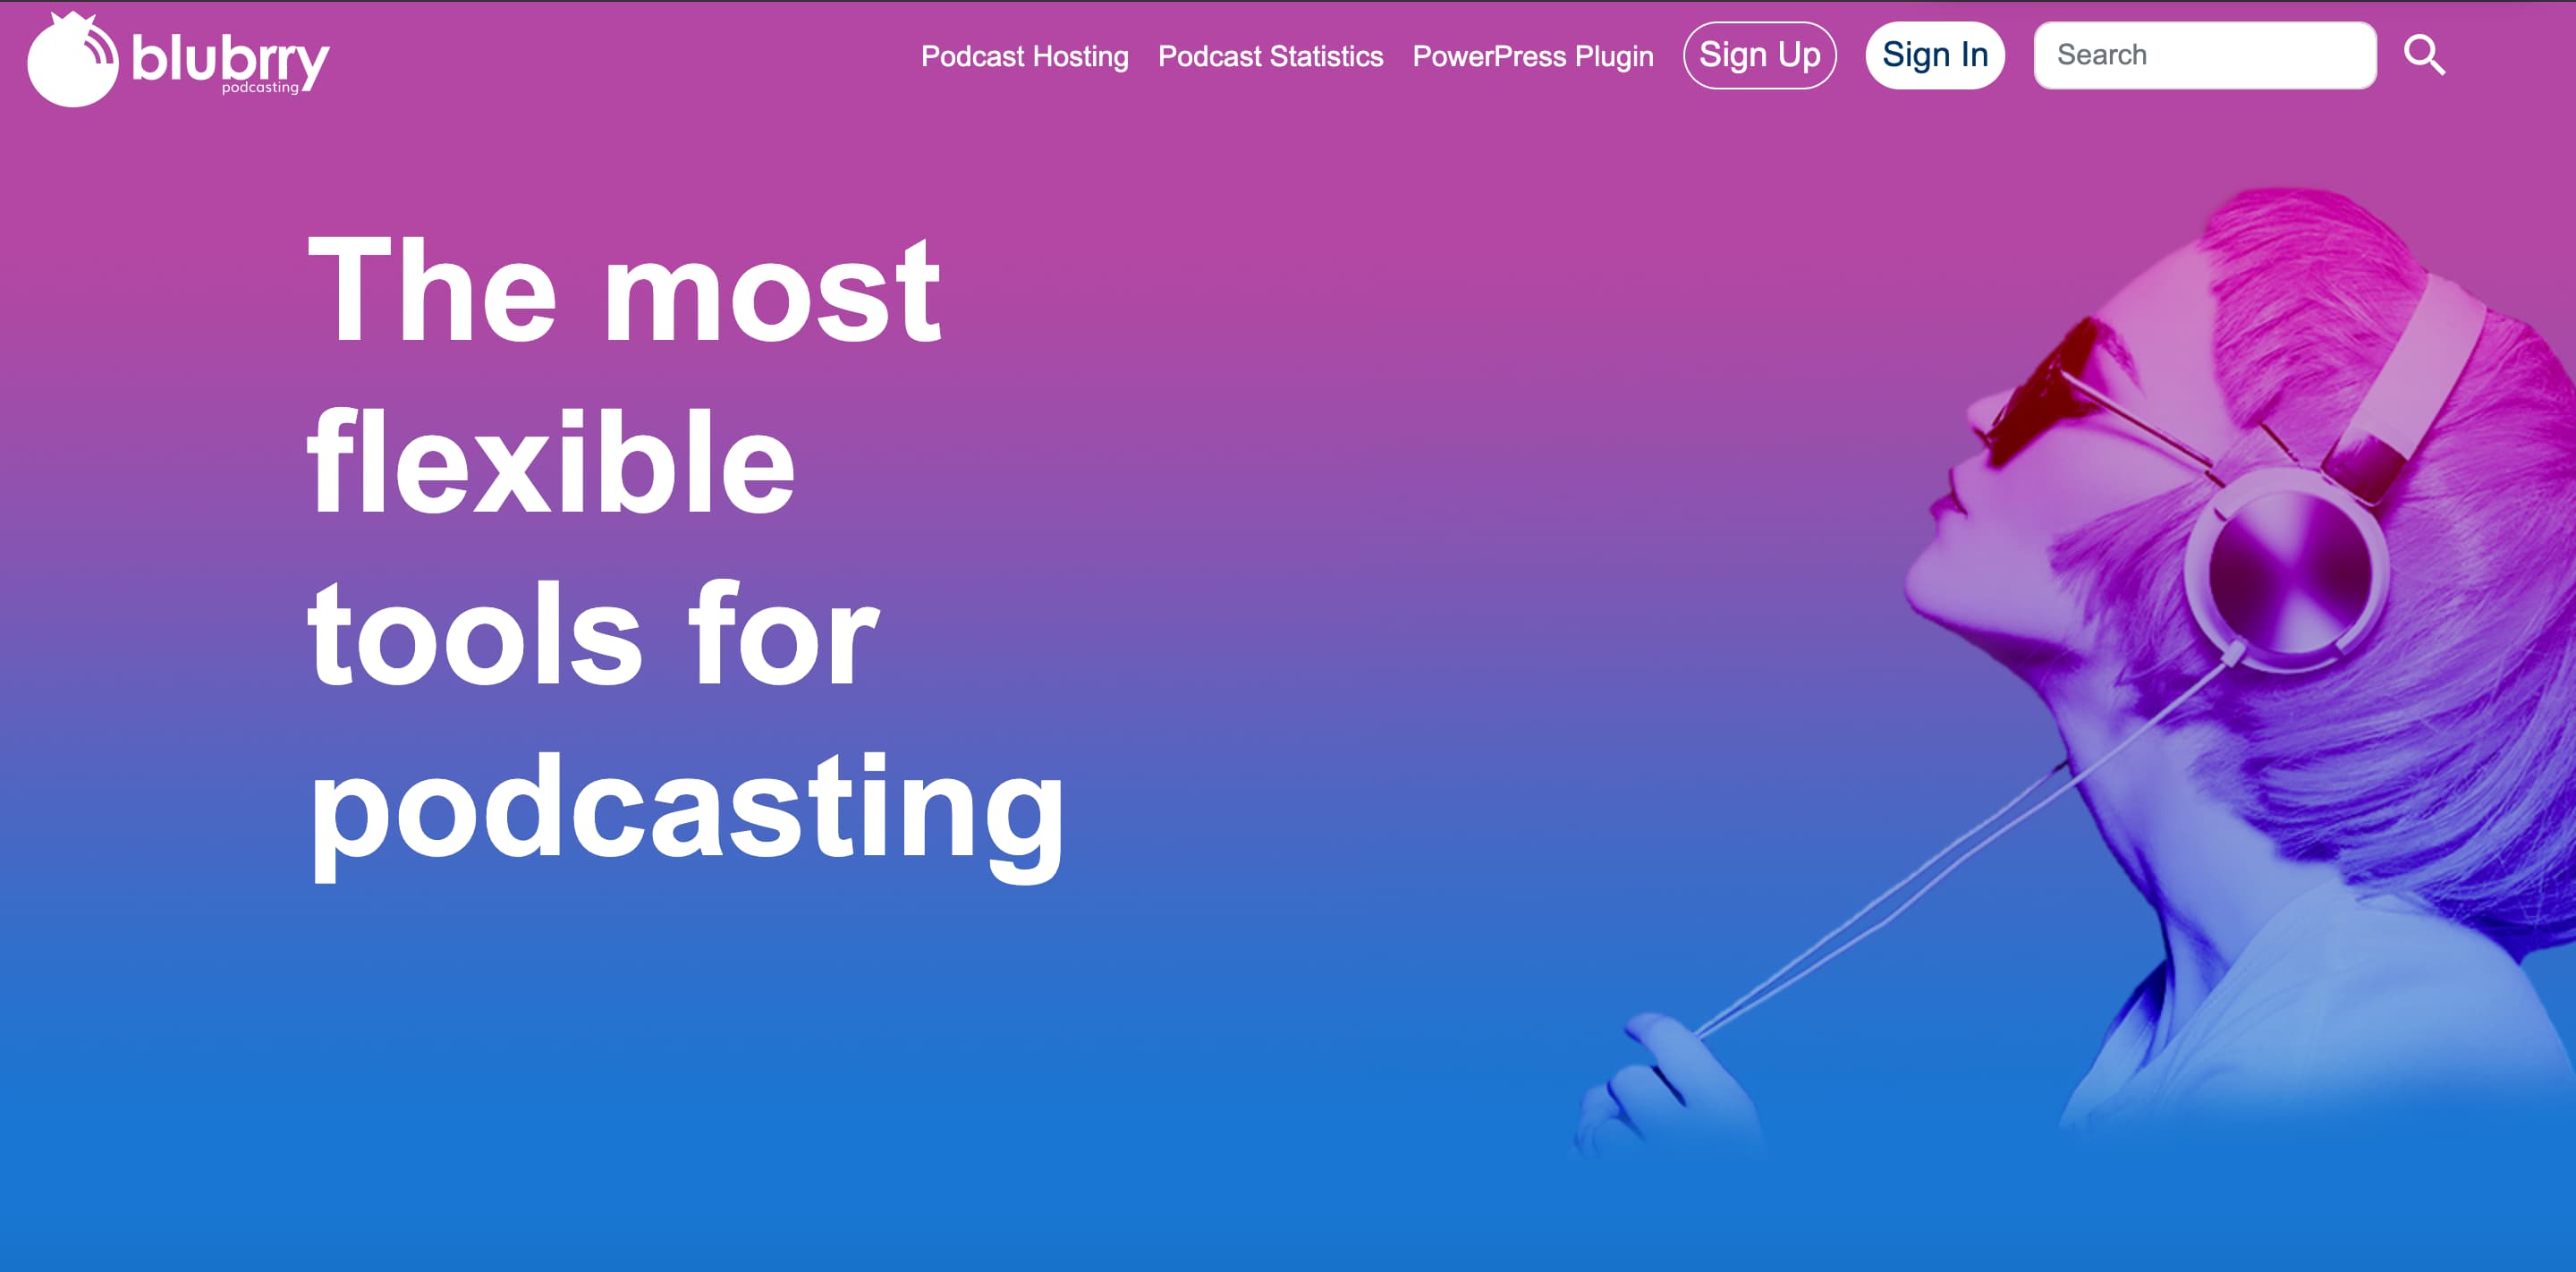 Blubrry podcast hosting homepage